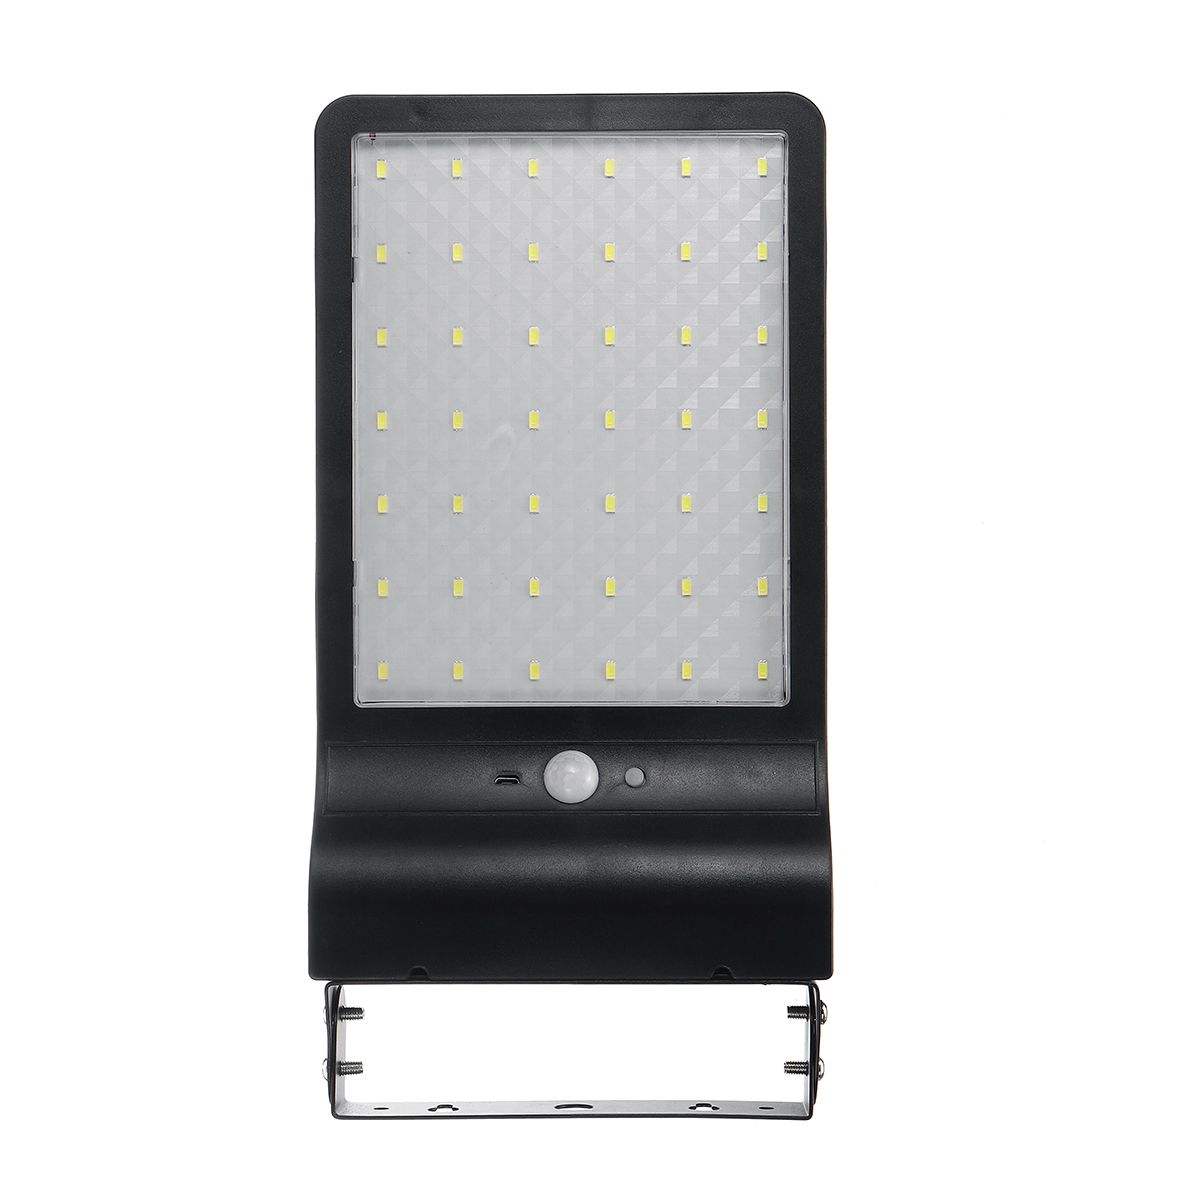 42-LED-Solar-Wall-Light-PIR-Motion-Sensor-3-Modes-Waterproof-IP65-Park-Yard-Garden-1588494